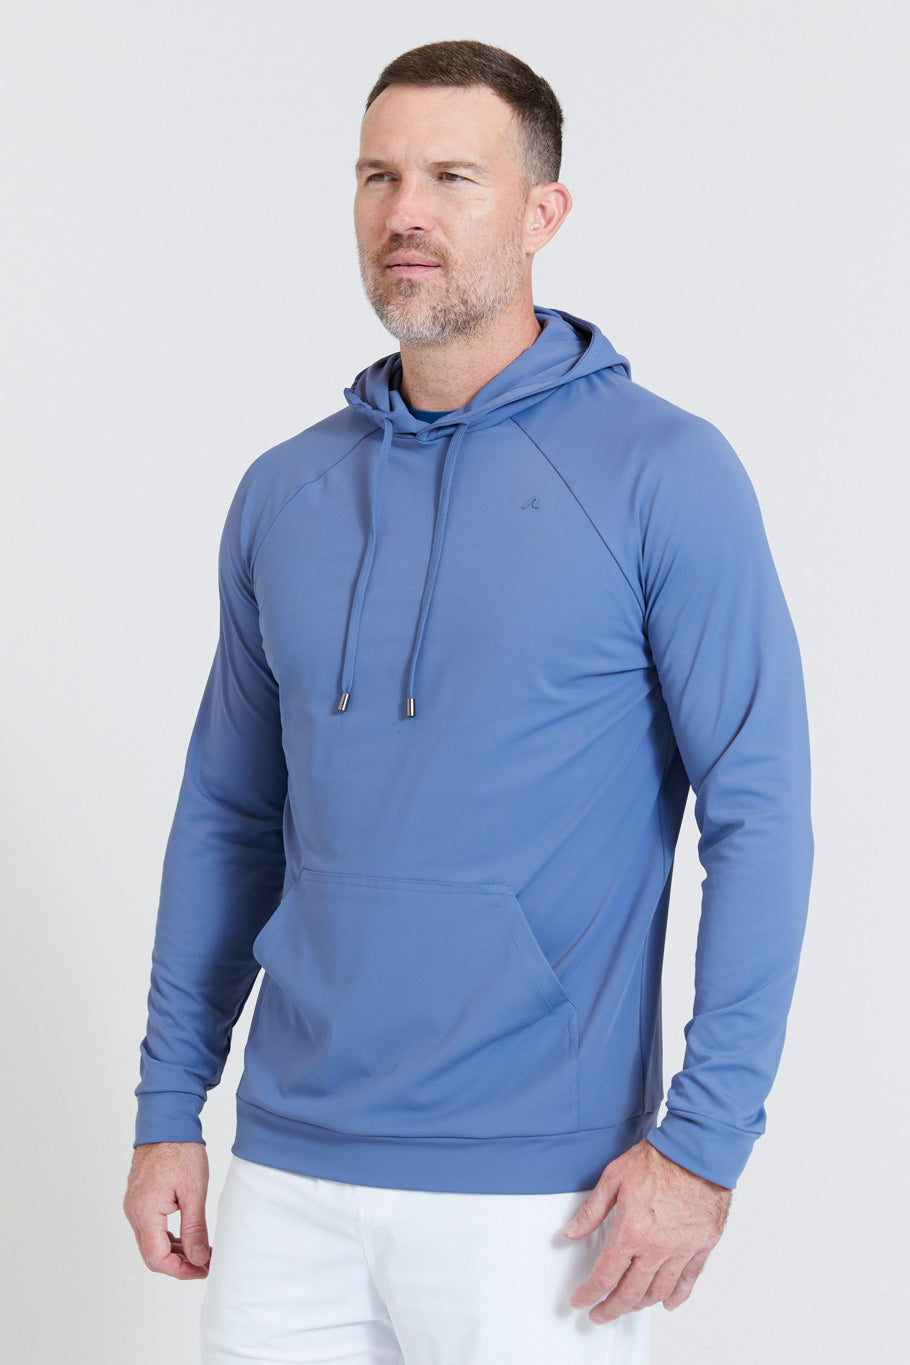 Image of the larkin hoodie in blue horizon